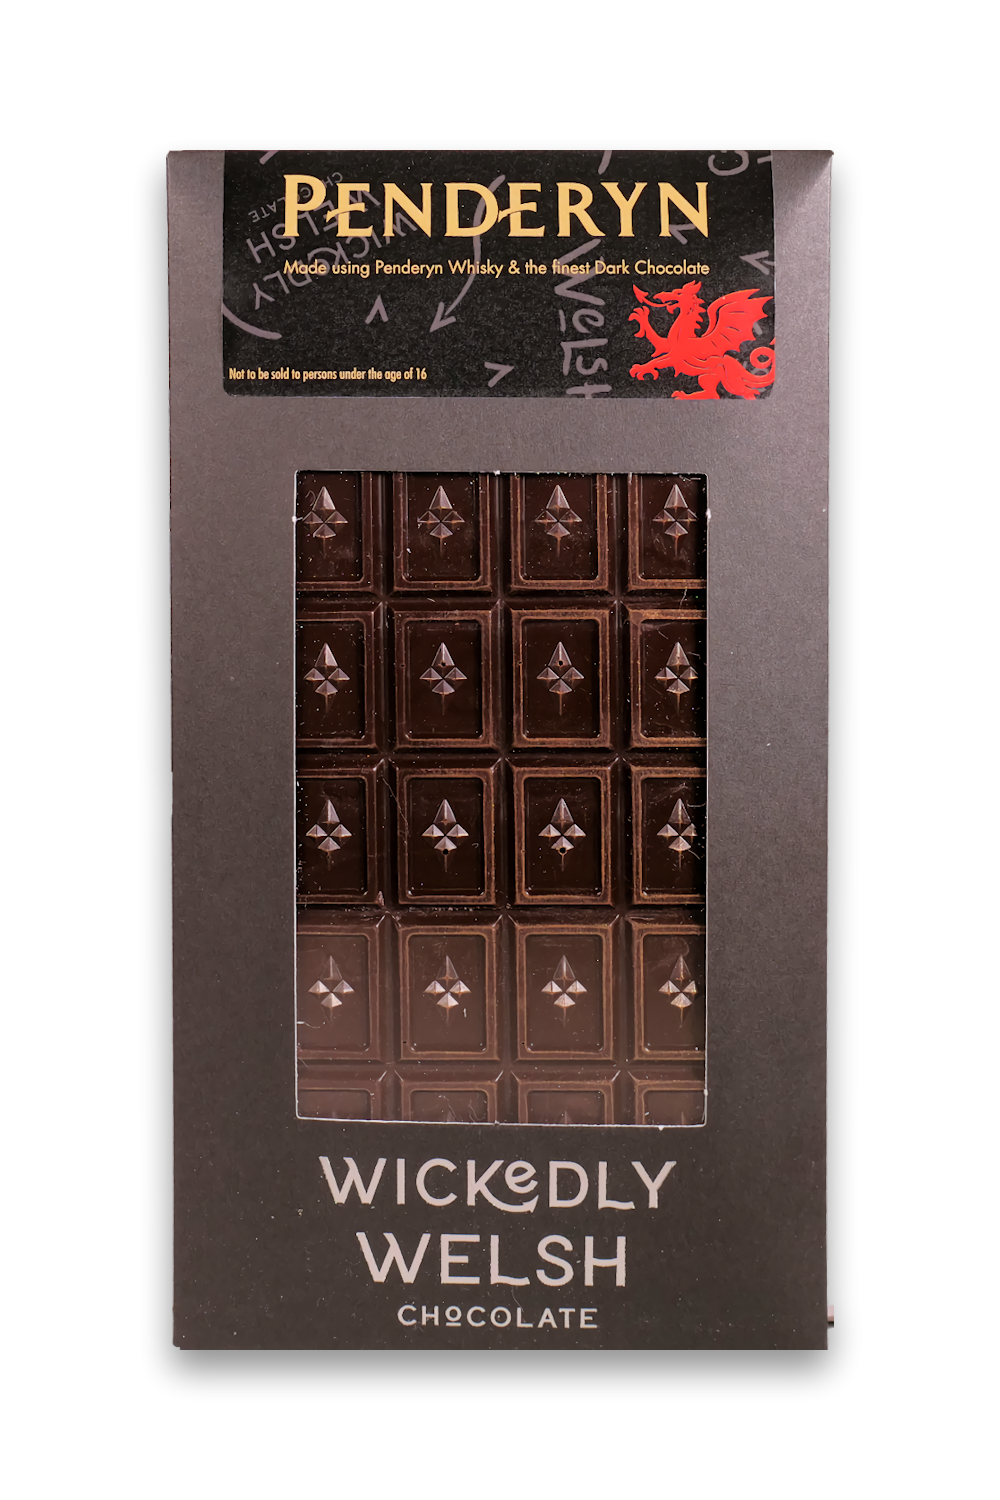 Penderyn Welsh Whisky in Dark Chocolate Bar